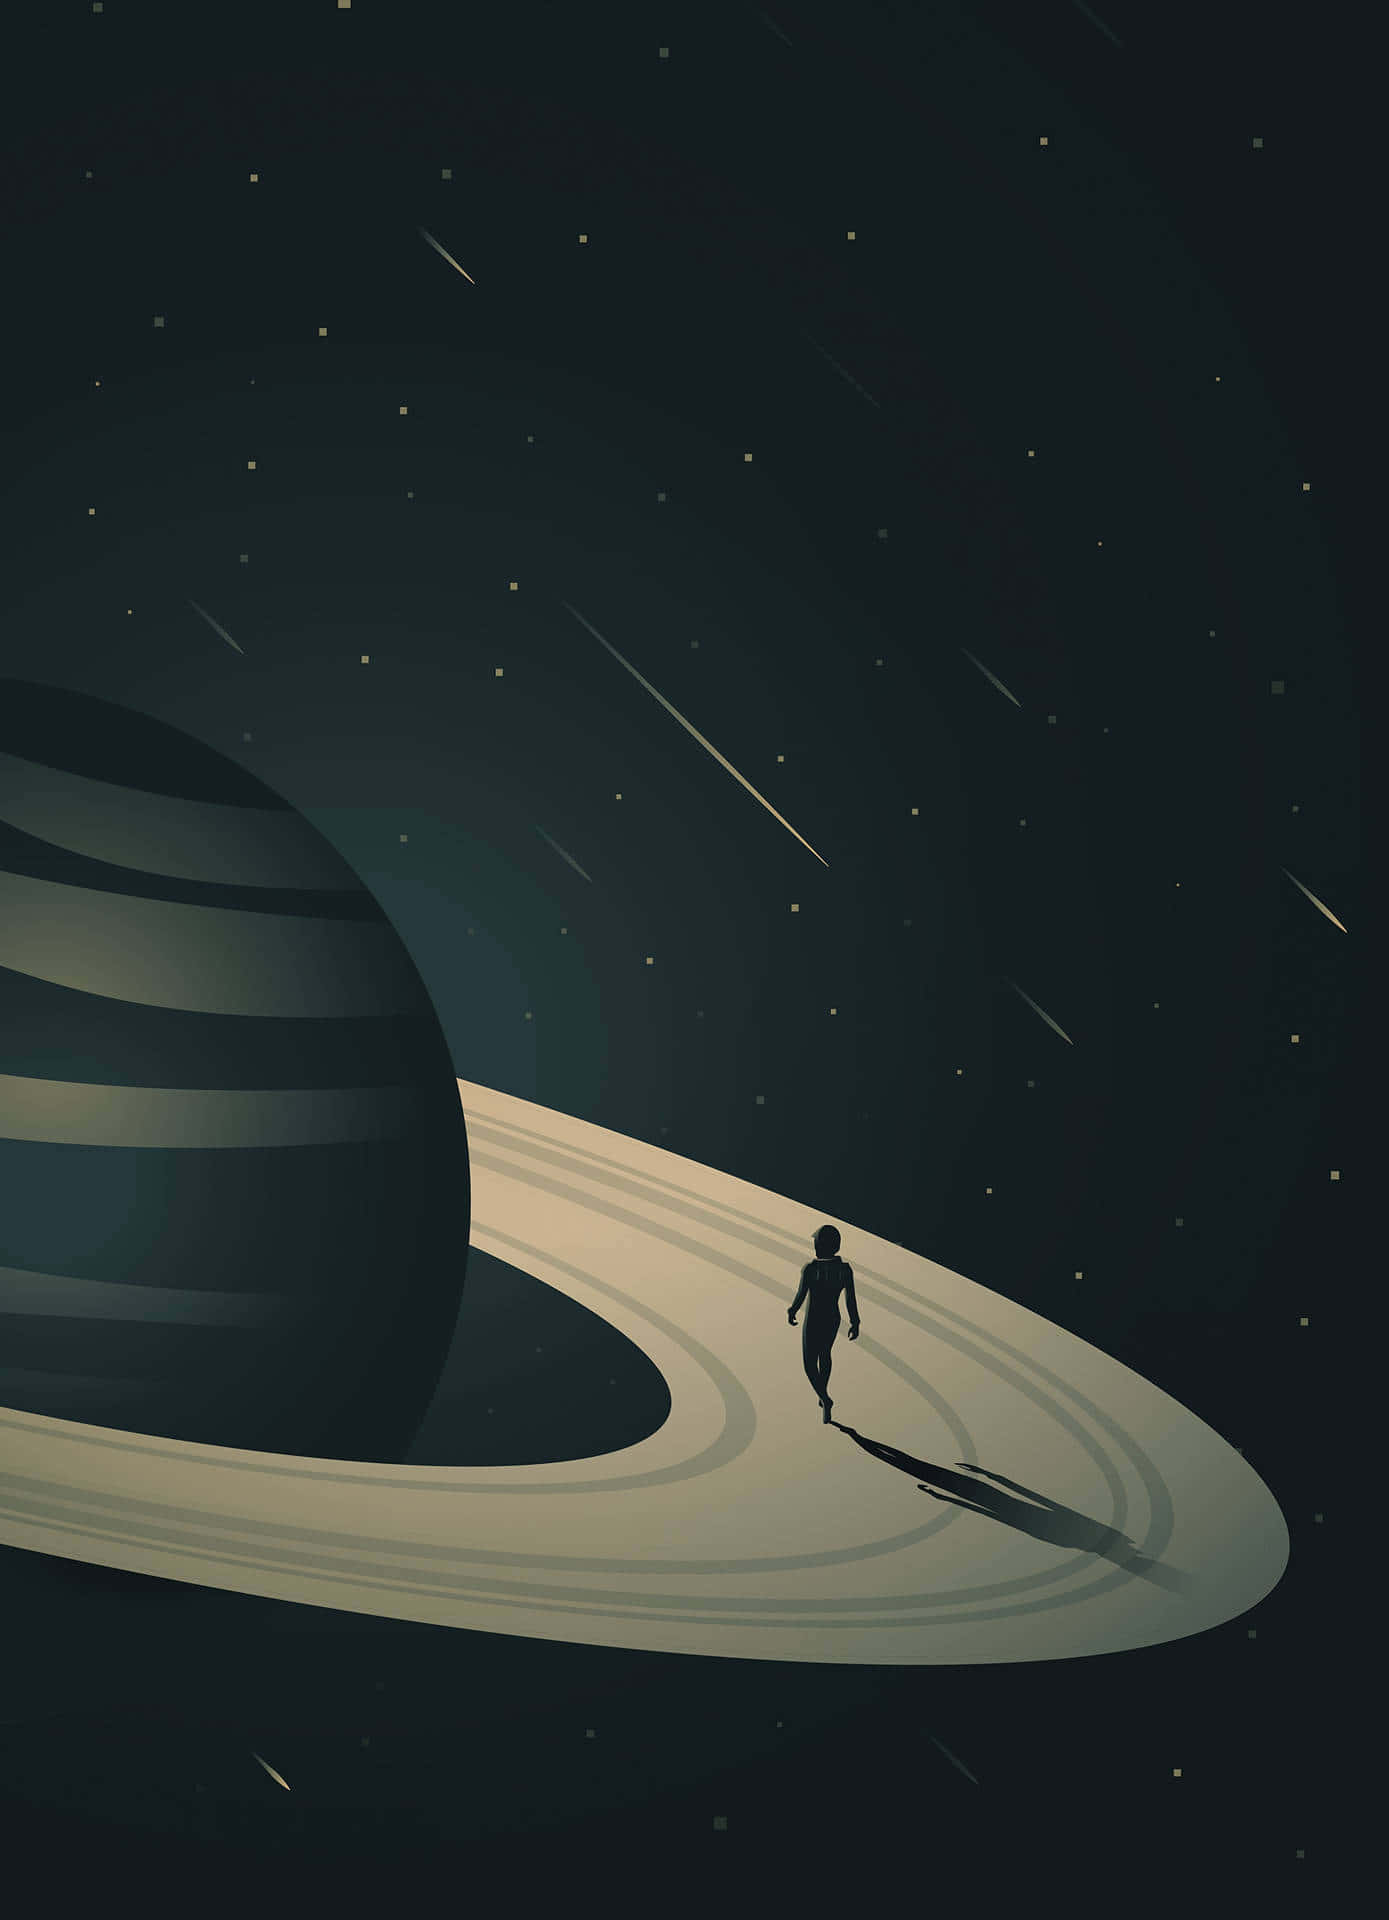 Minimalist Space Illustration Wallpaper